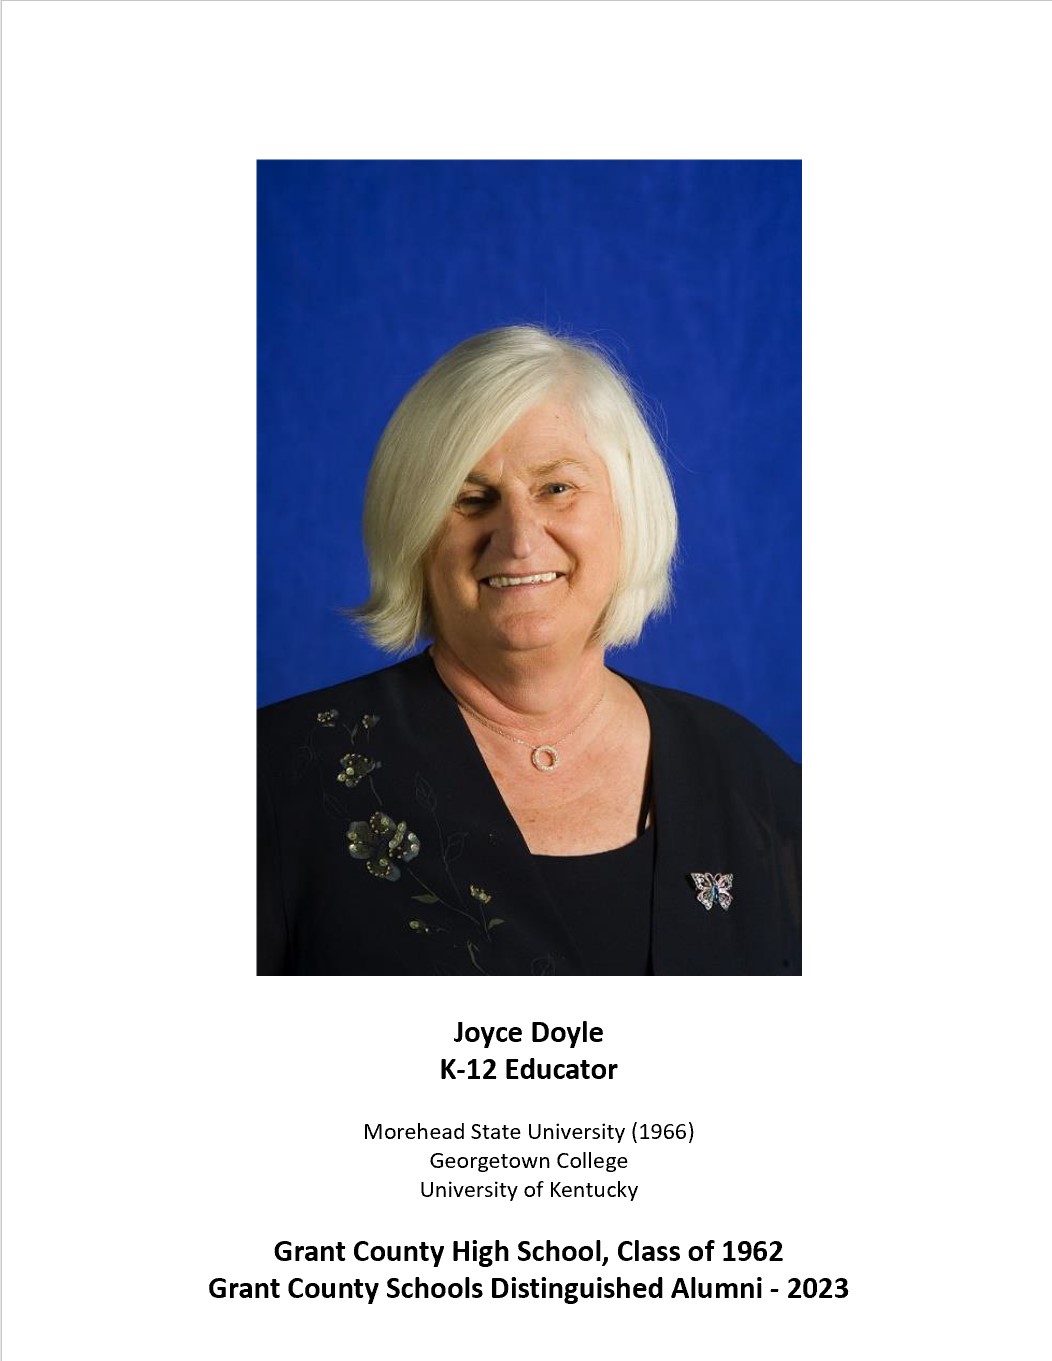 Joyce Doyle Distinguished Alumni